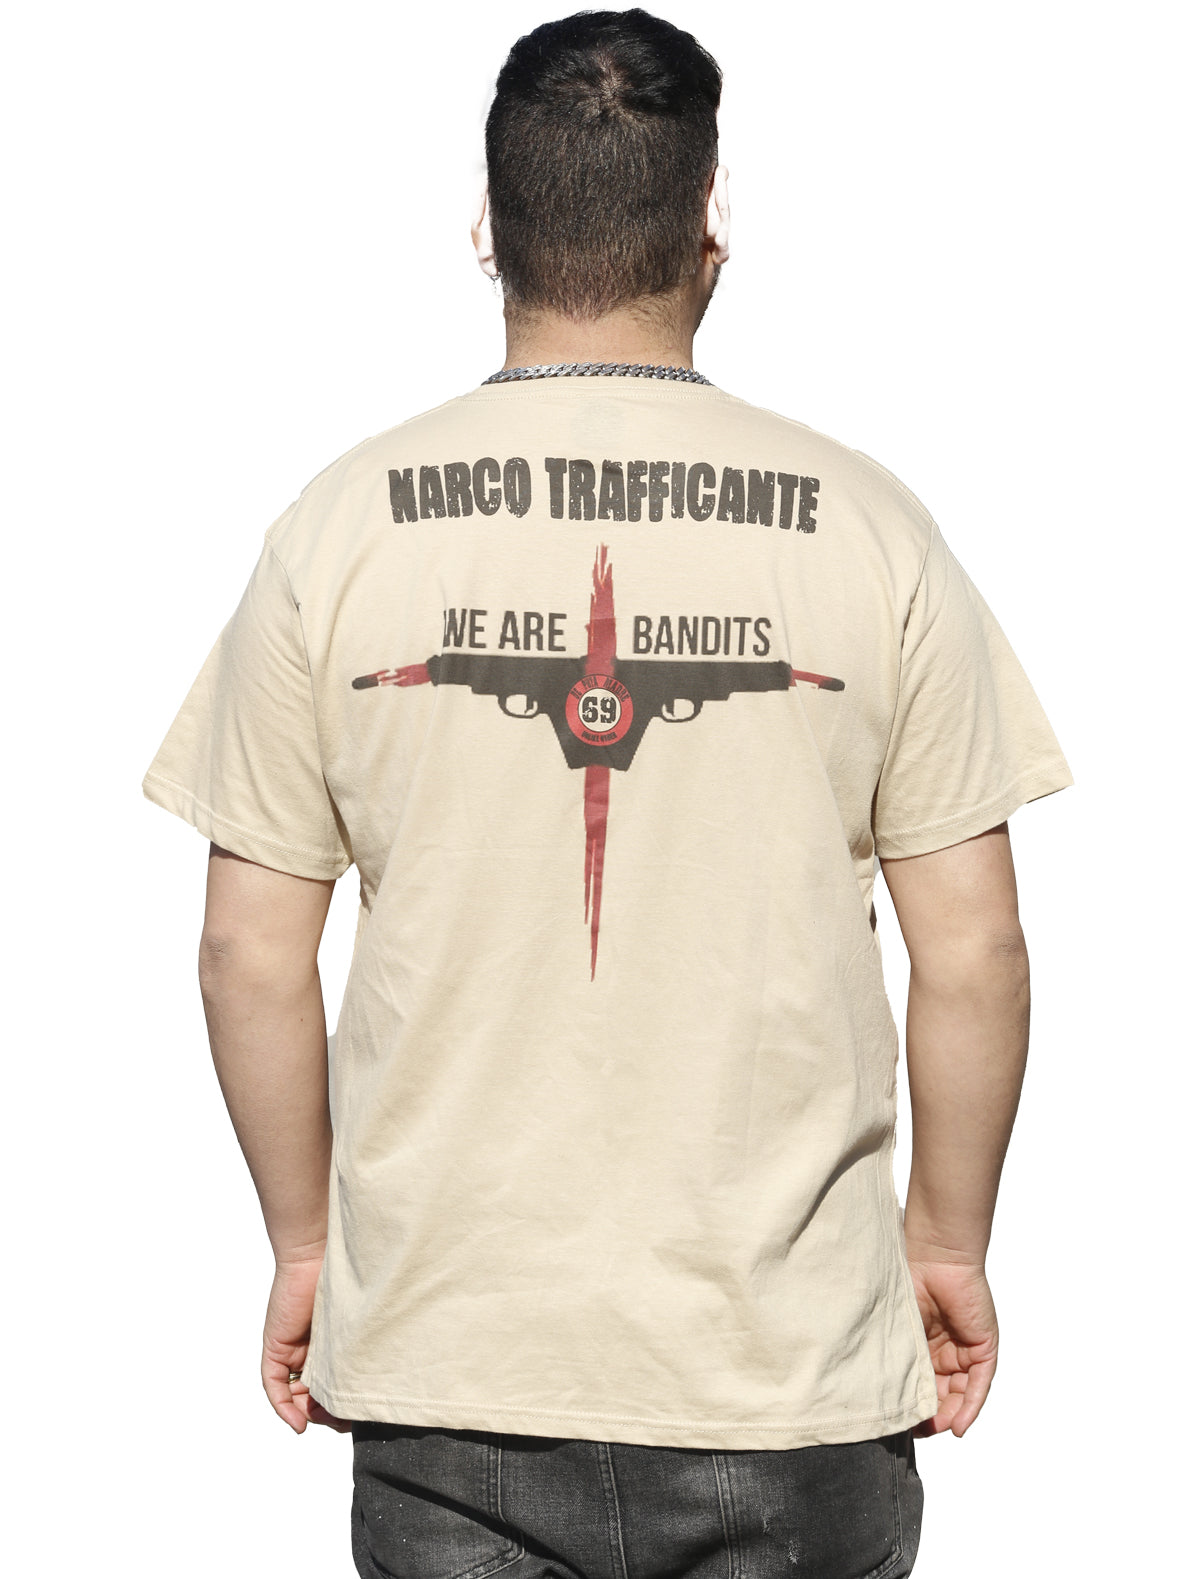 DPM69 T-shirt da uomo Design fatto a mano We are Bandits Narcos creme